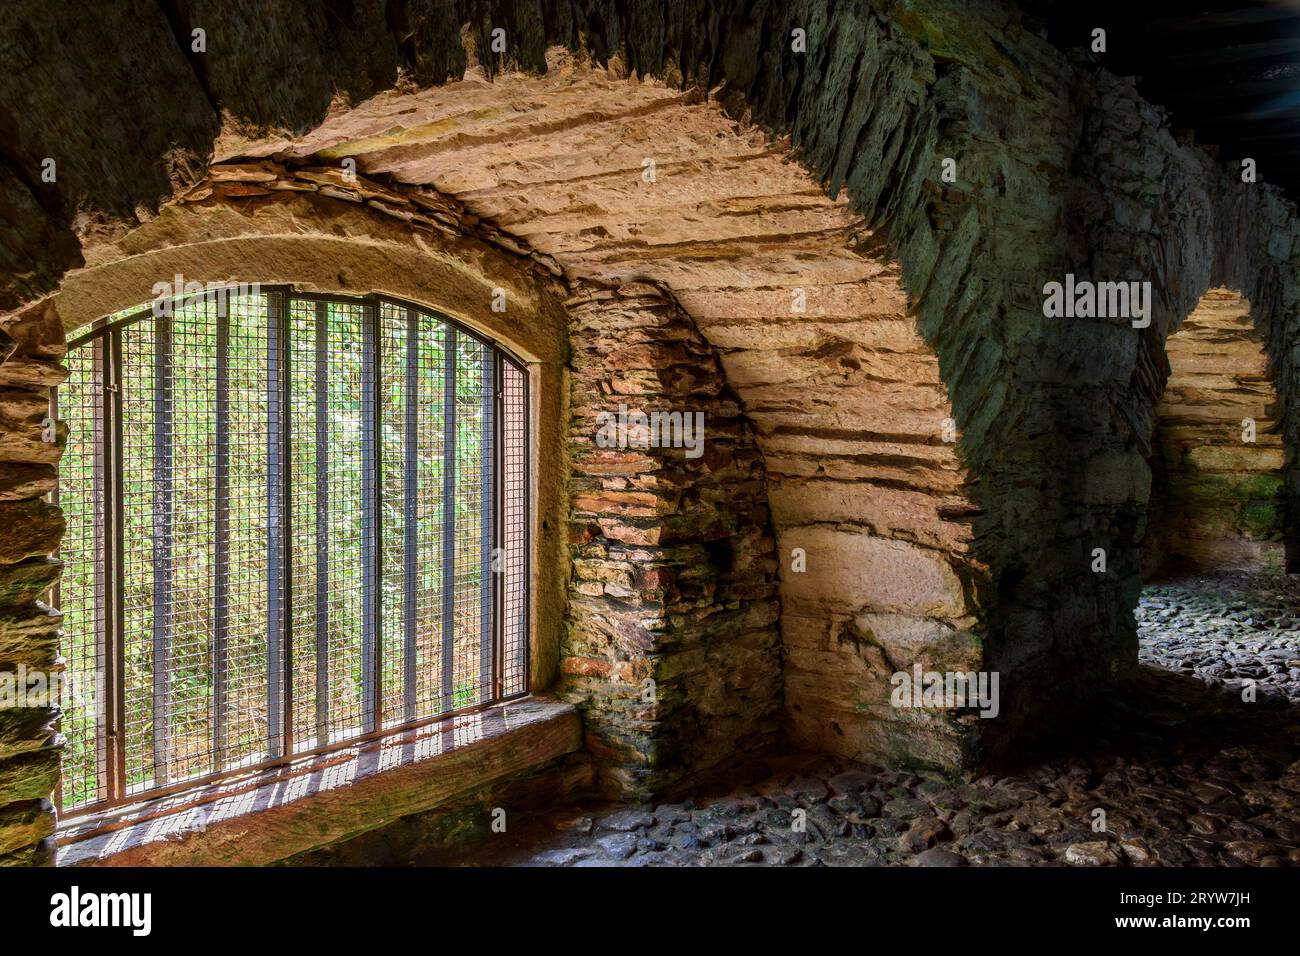 Bars and windows of underground Senzala used to imprison slaves Stock Photo